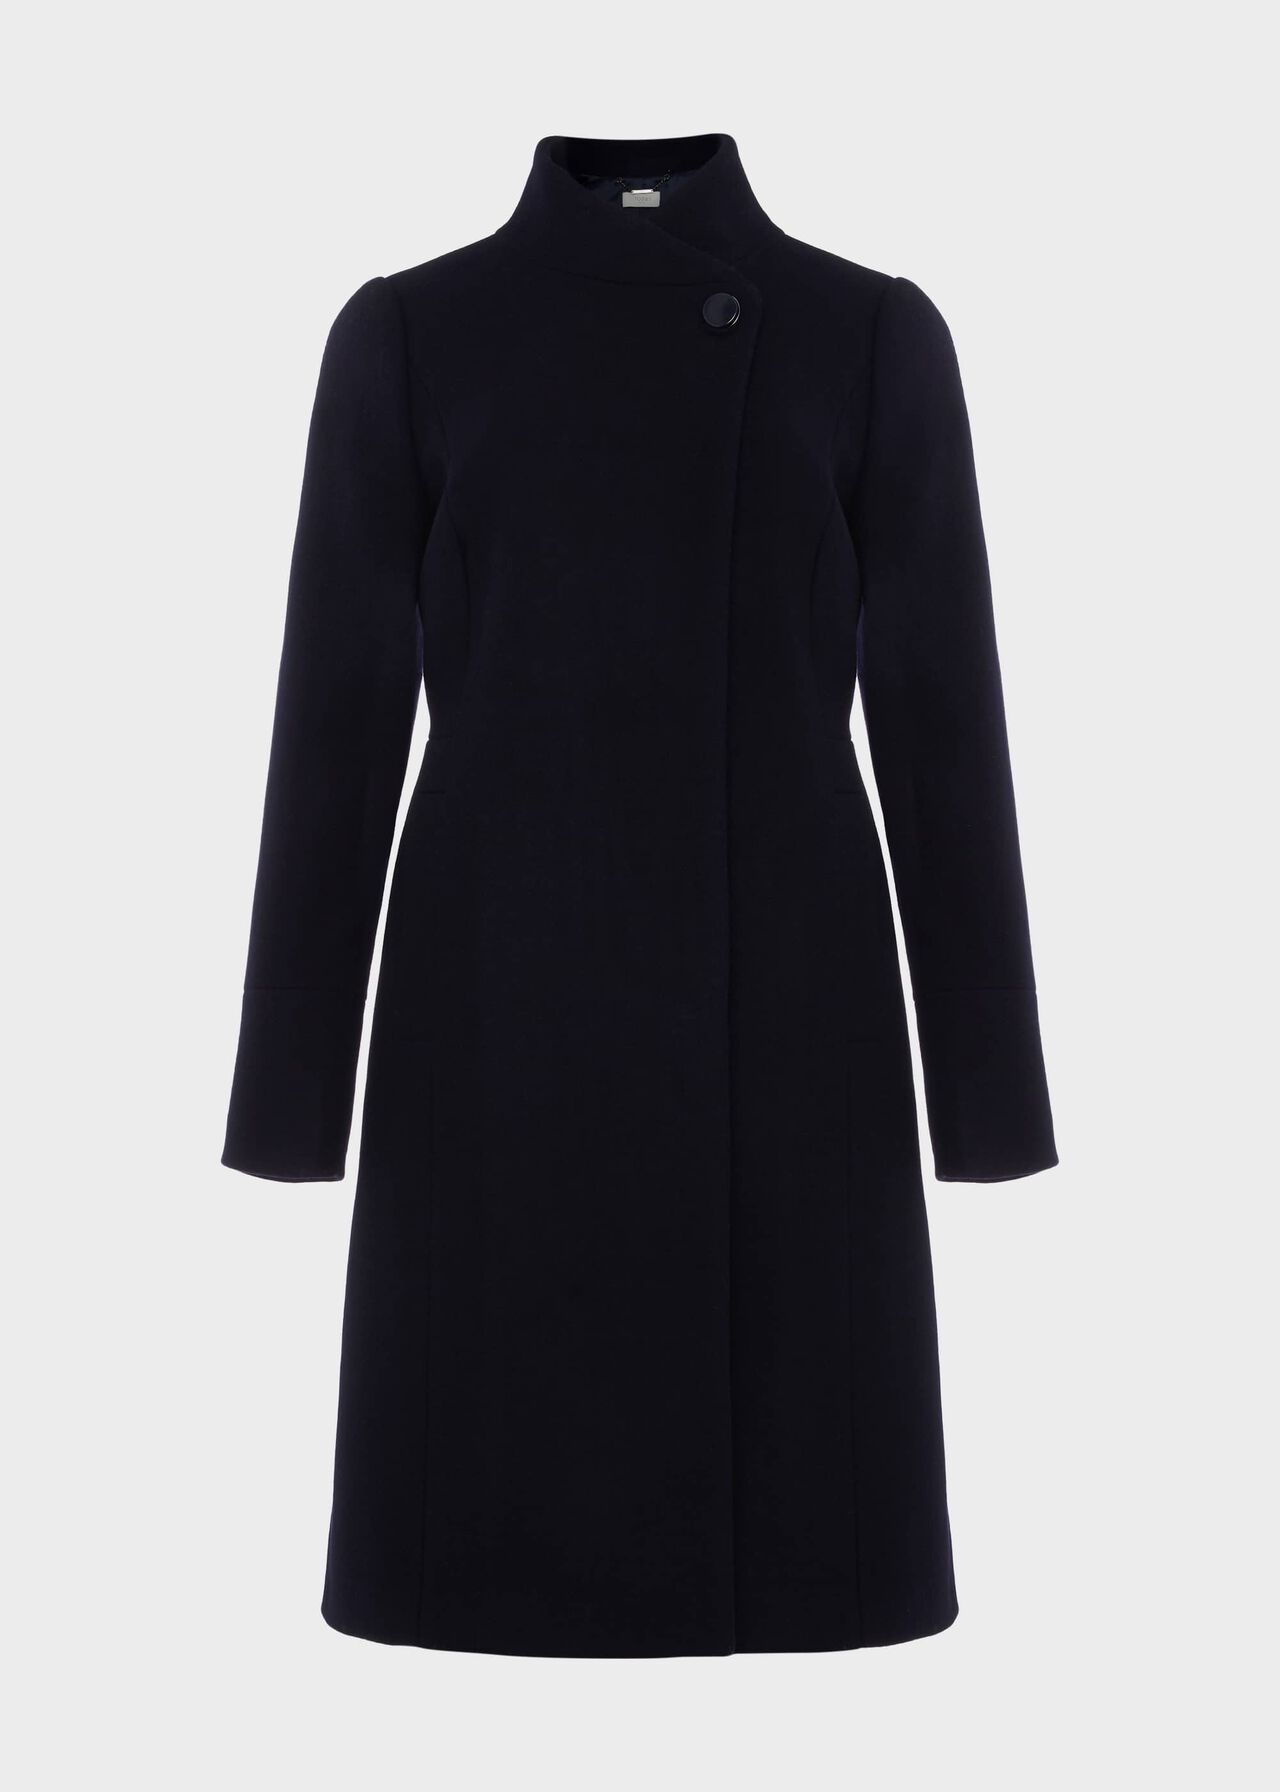 Maisie Wool Blend Coat, Navy, hi-res